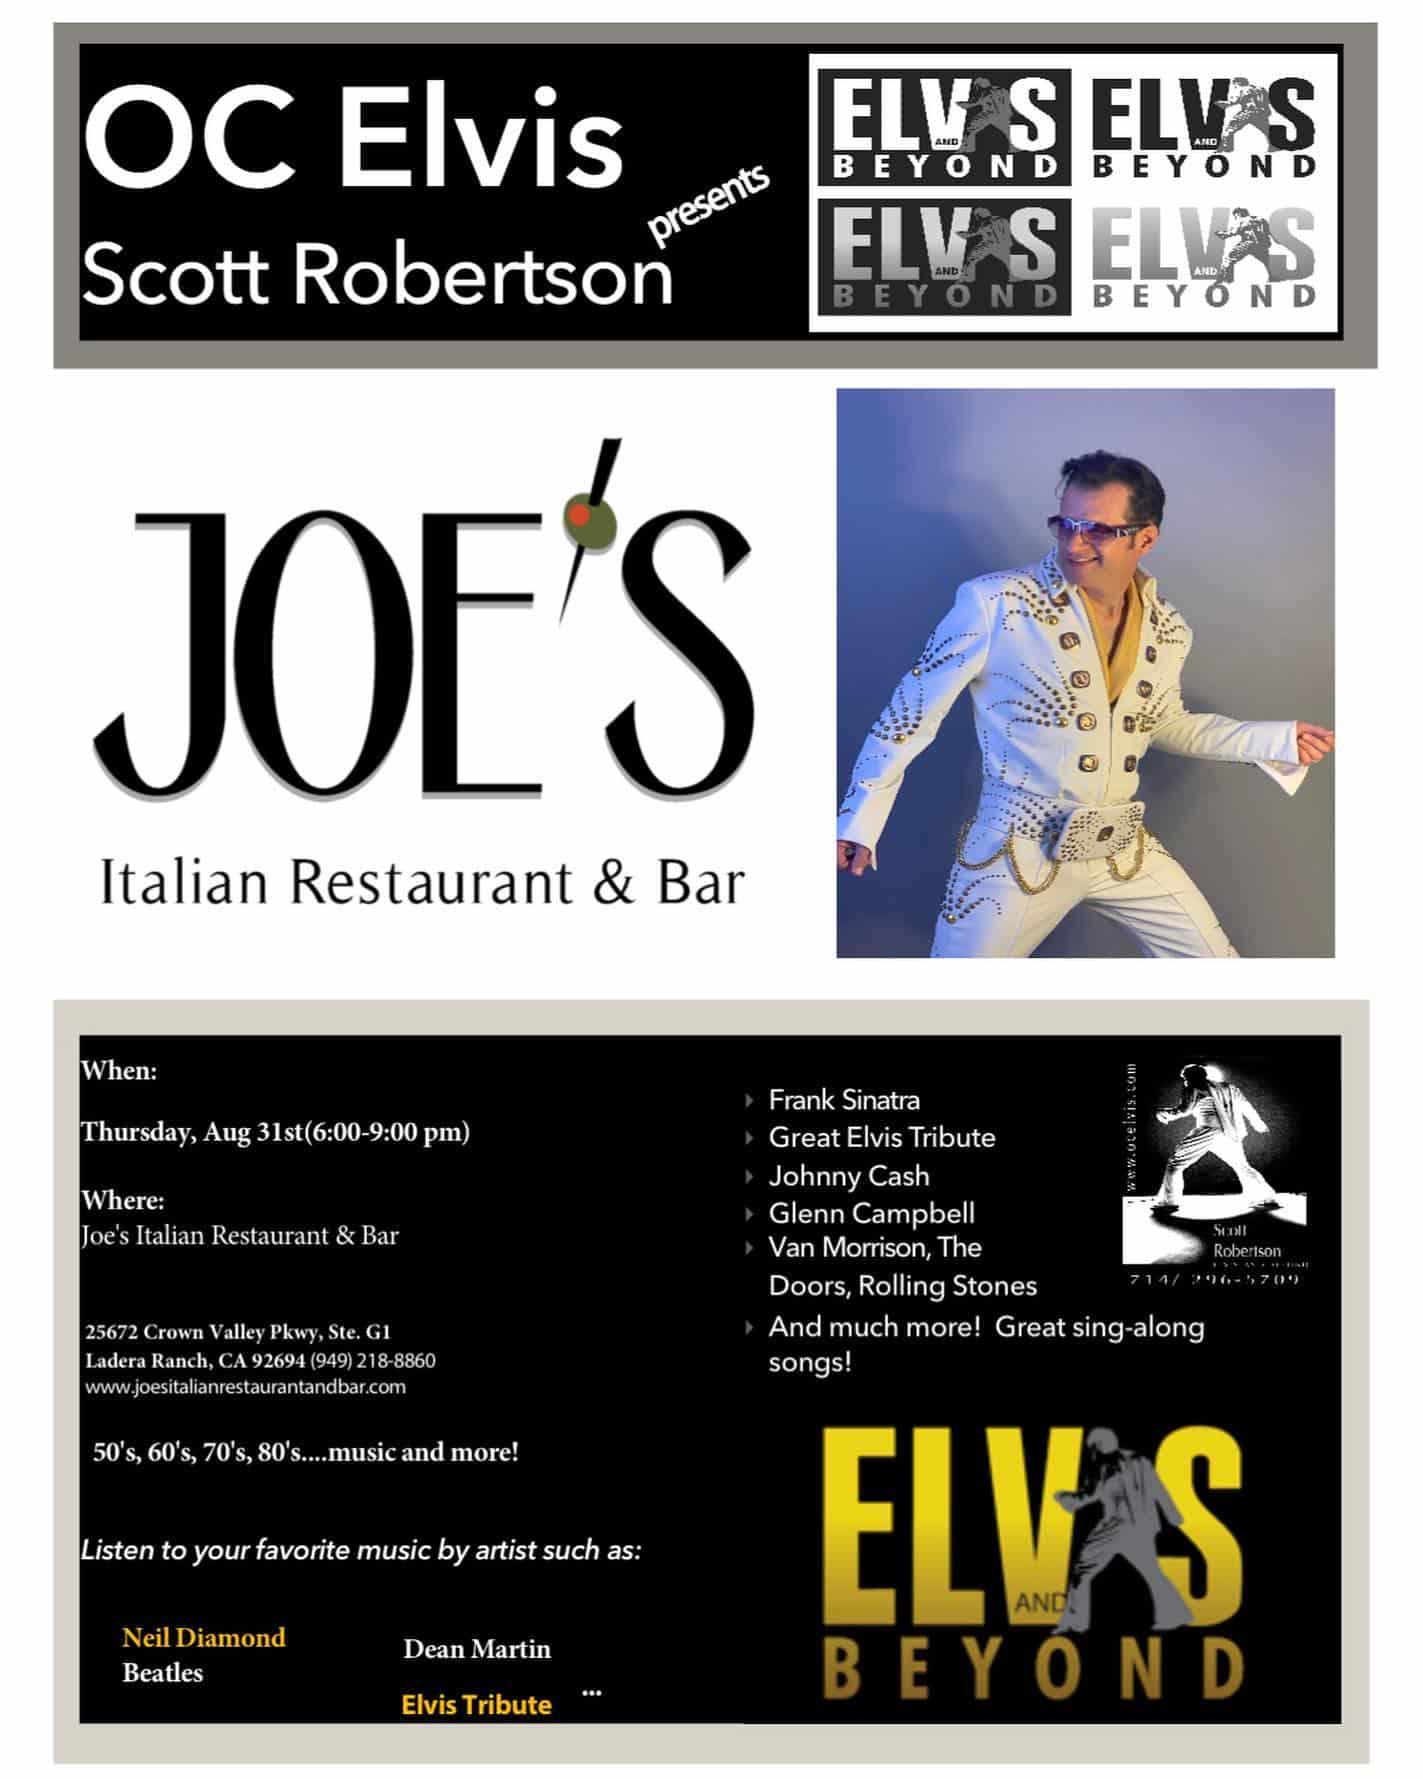 Scott Robertson at Joe's Italian Restaurant